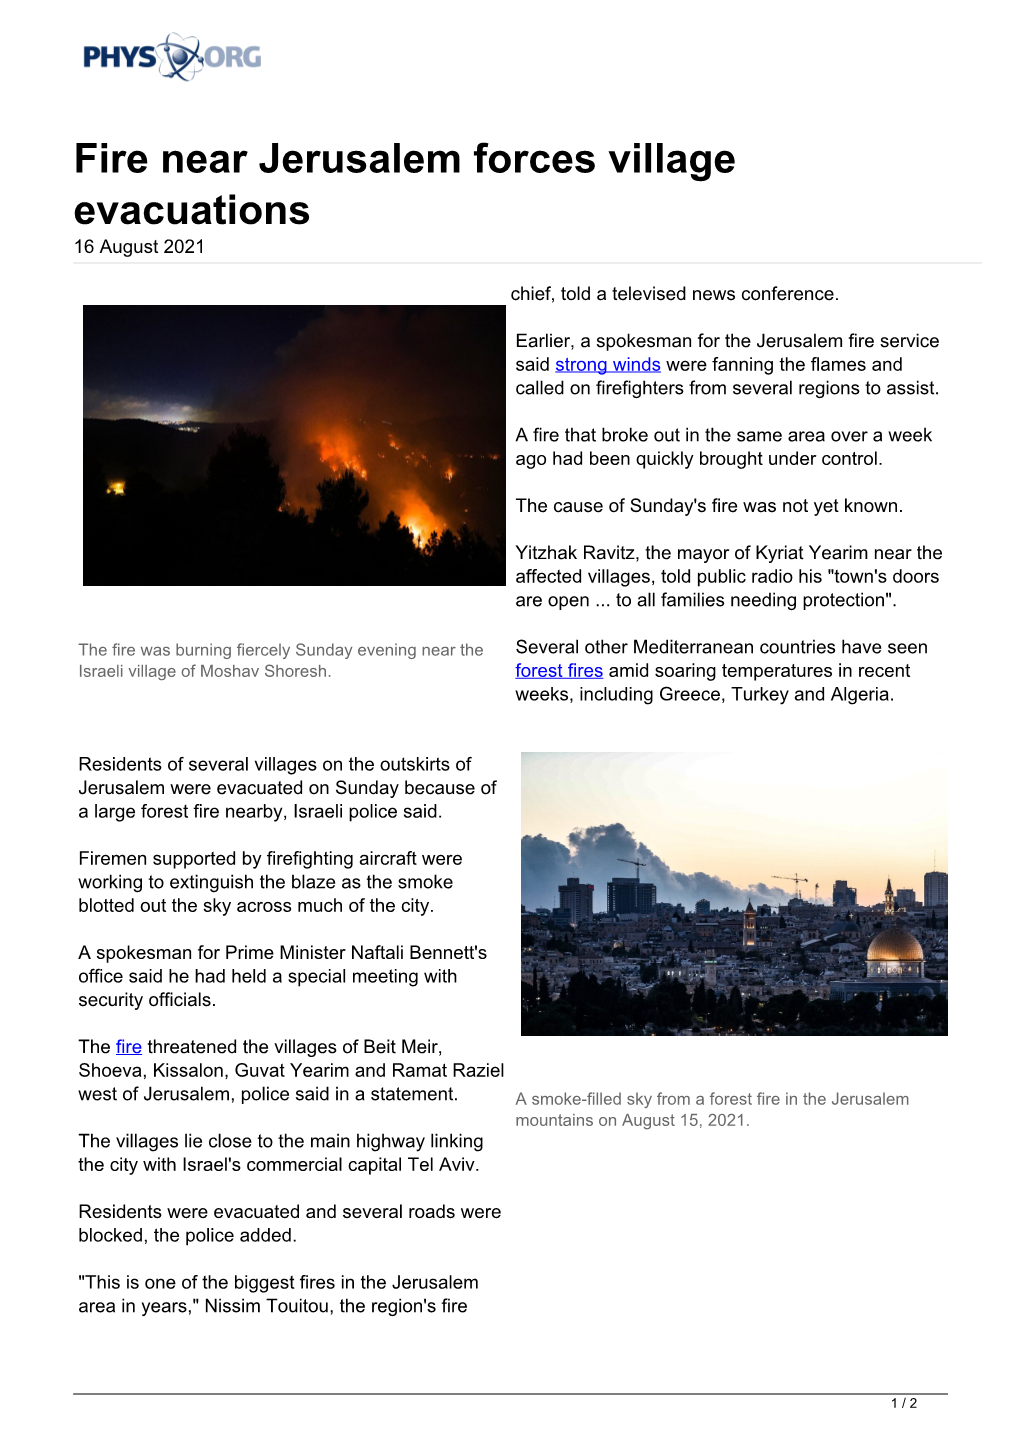 Fire Near Jerusalem Forces Village Evacuations 16 August 2021